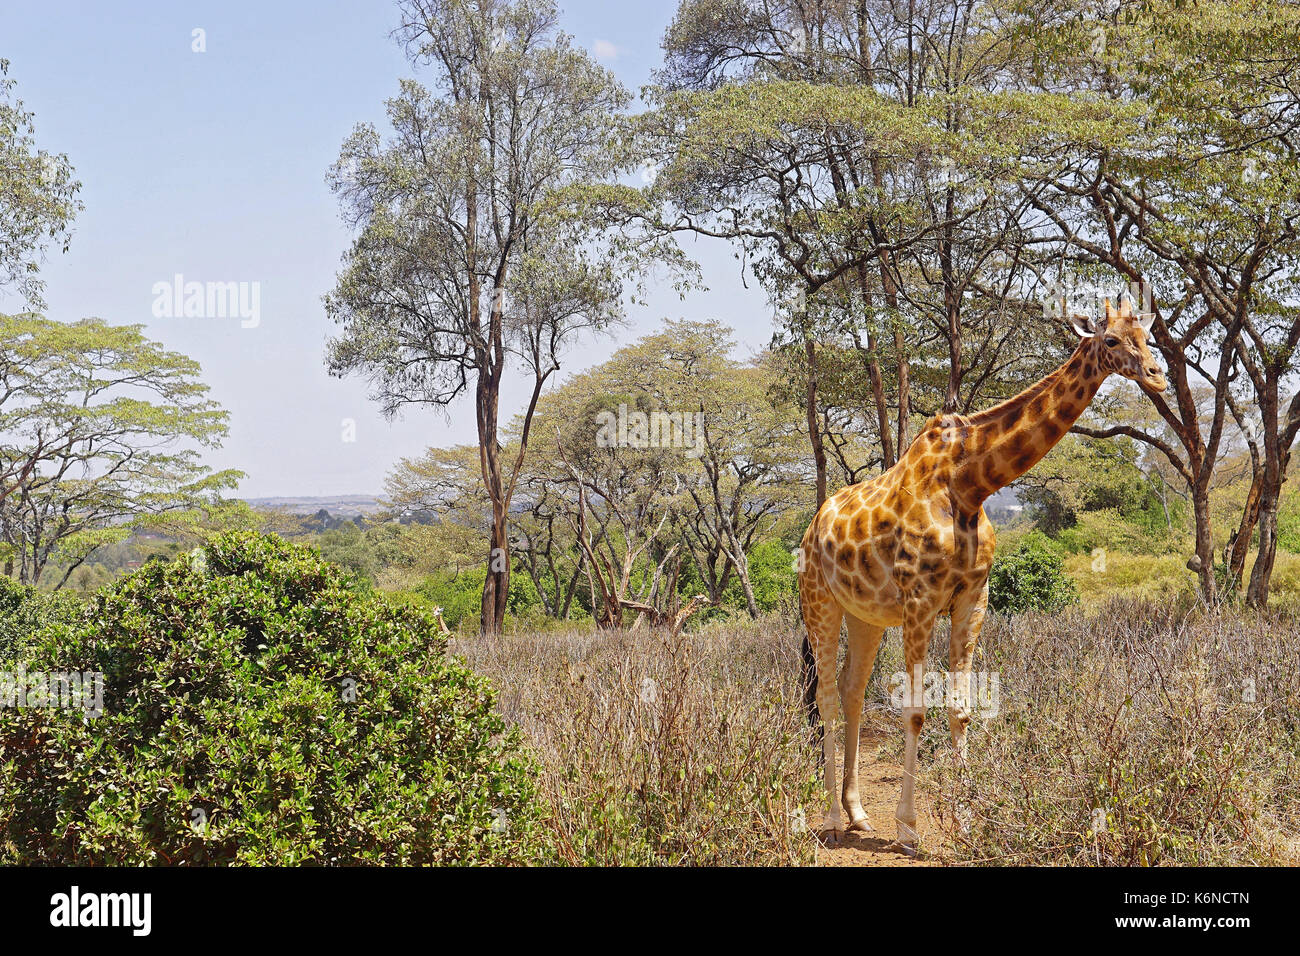 Wild animal giraffe in Africa Stock Photo